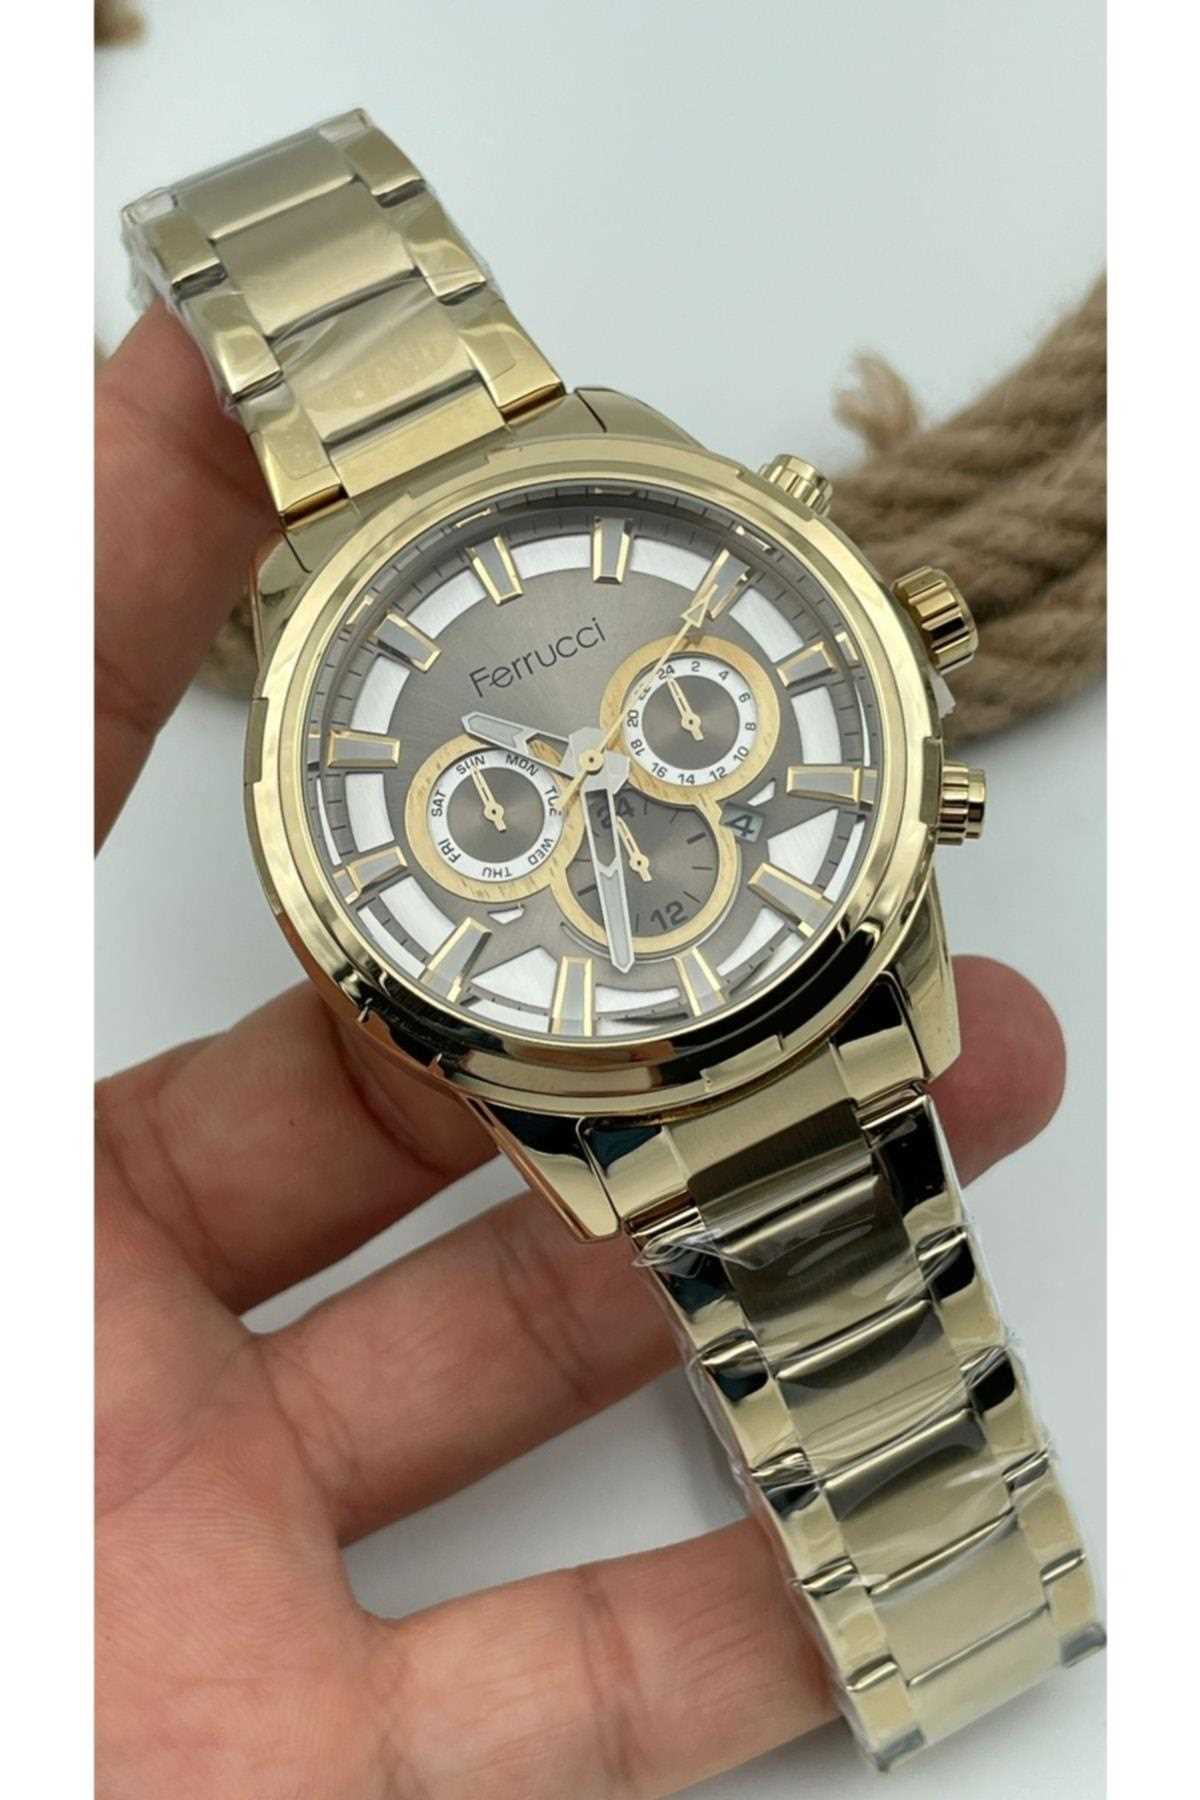 خرید اینترنتی ساعت مردانه شیک شیک Ferrucci رنگ طلایی ty260850171